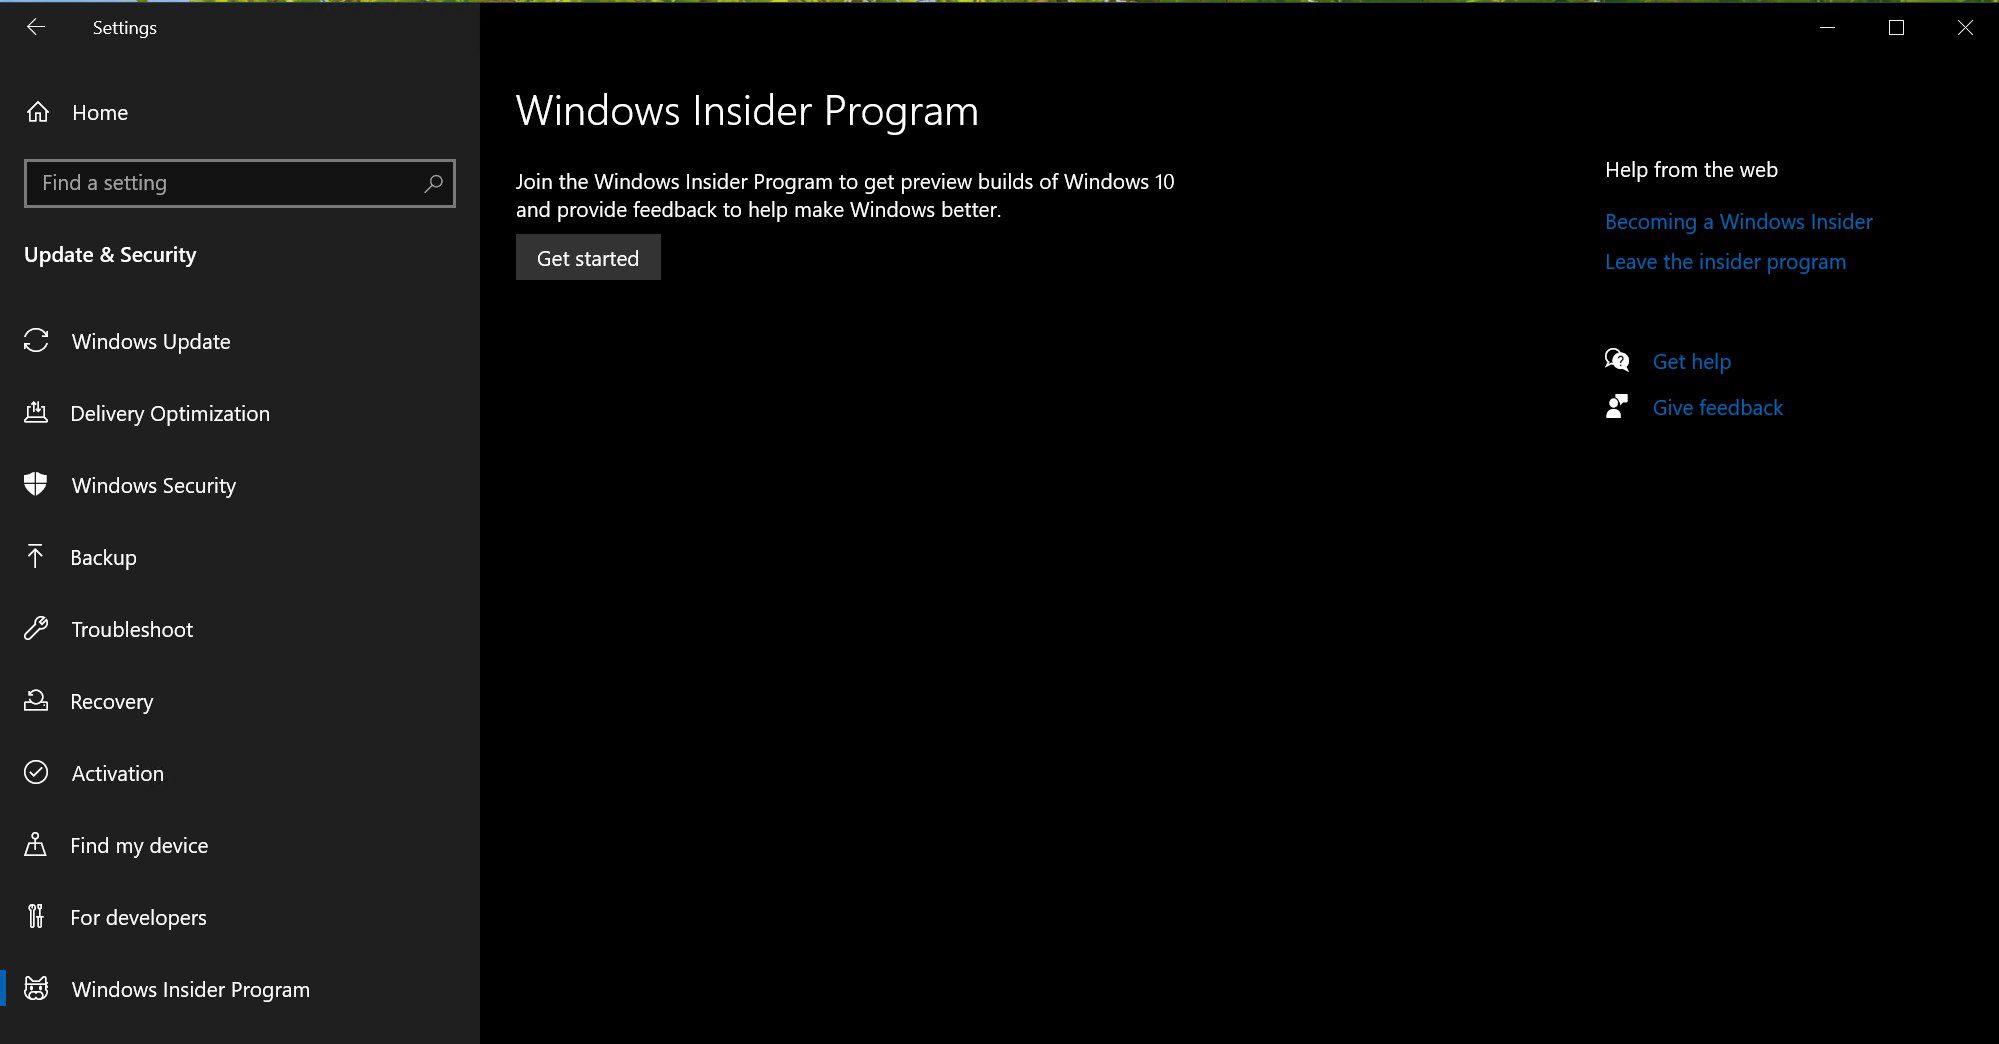 Windows Insider Program - The Beginning